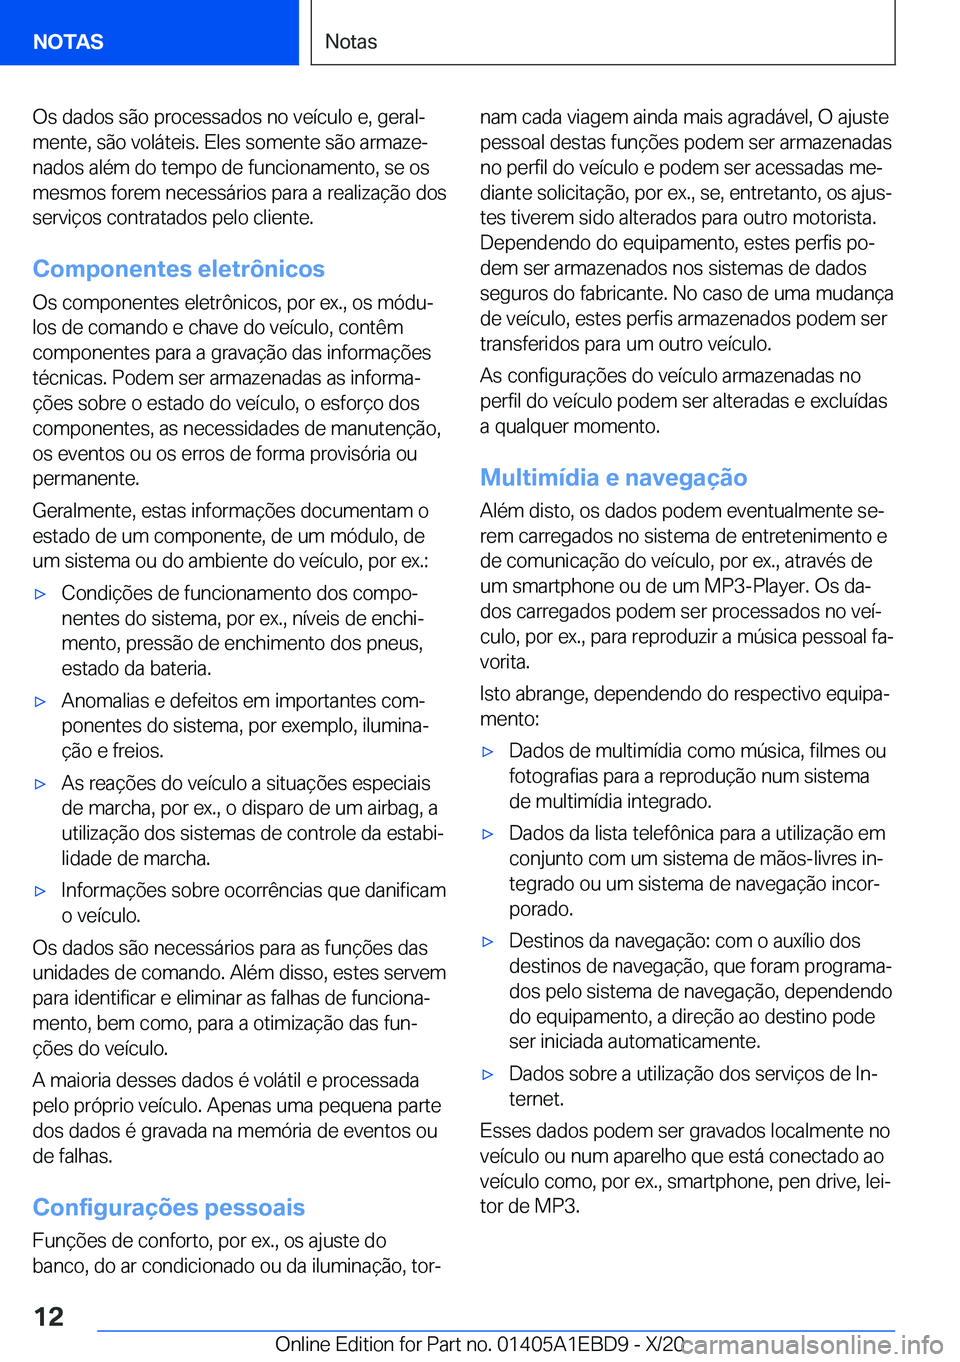 BMW 3 SERIES 2021  Manual do condutor (in Portuguese) �O�s��d�a�d�o�s��s�ã�o��p�r�o�c�e�s�s�a�d�o�s��n�o��v�e�